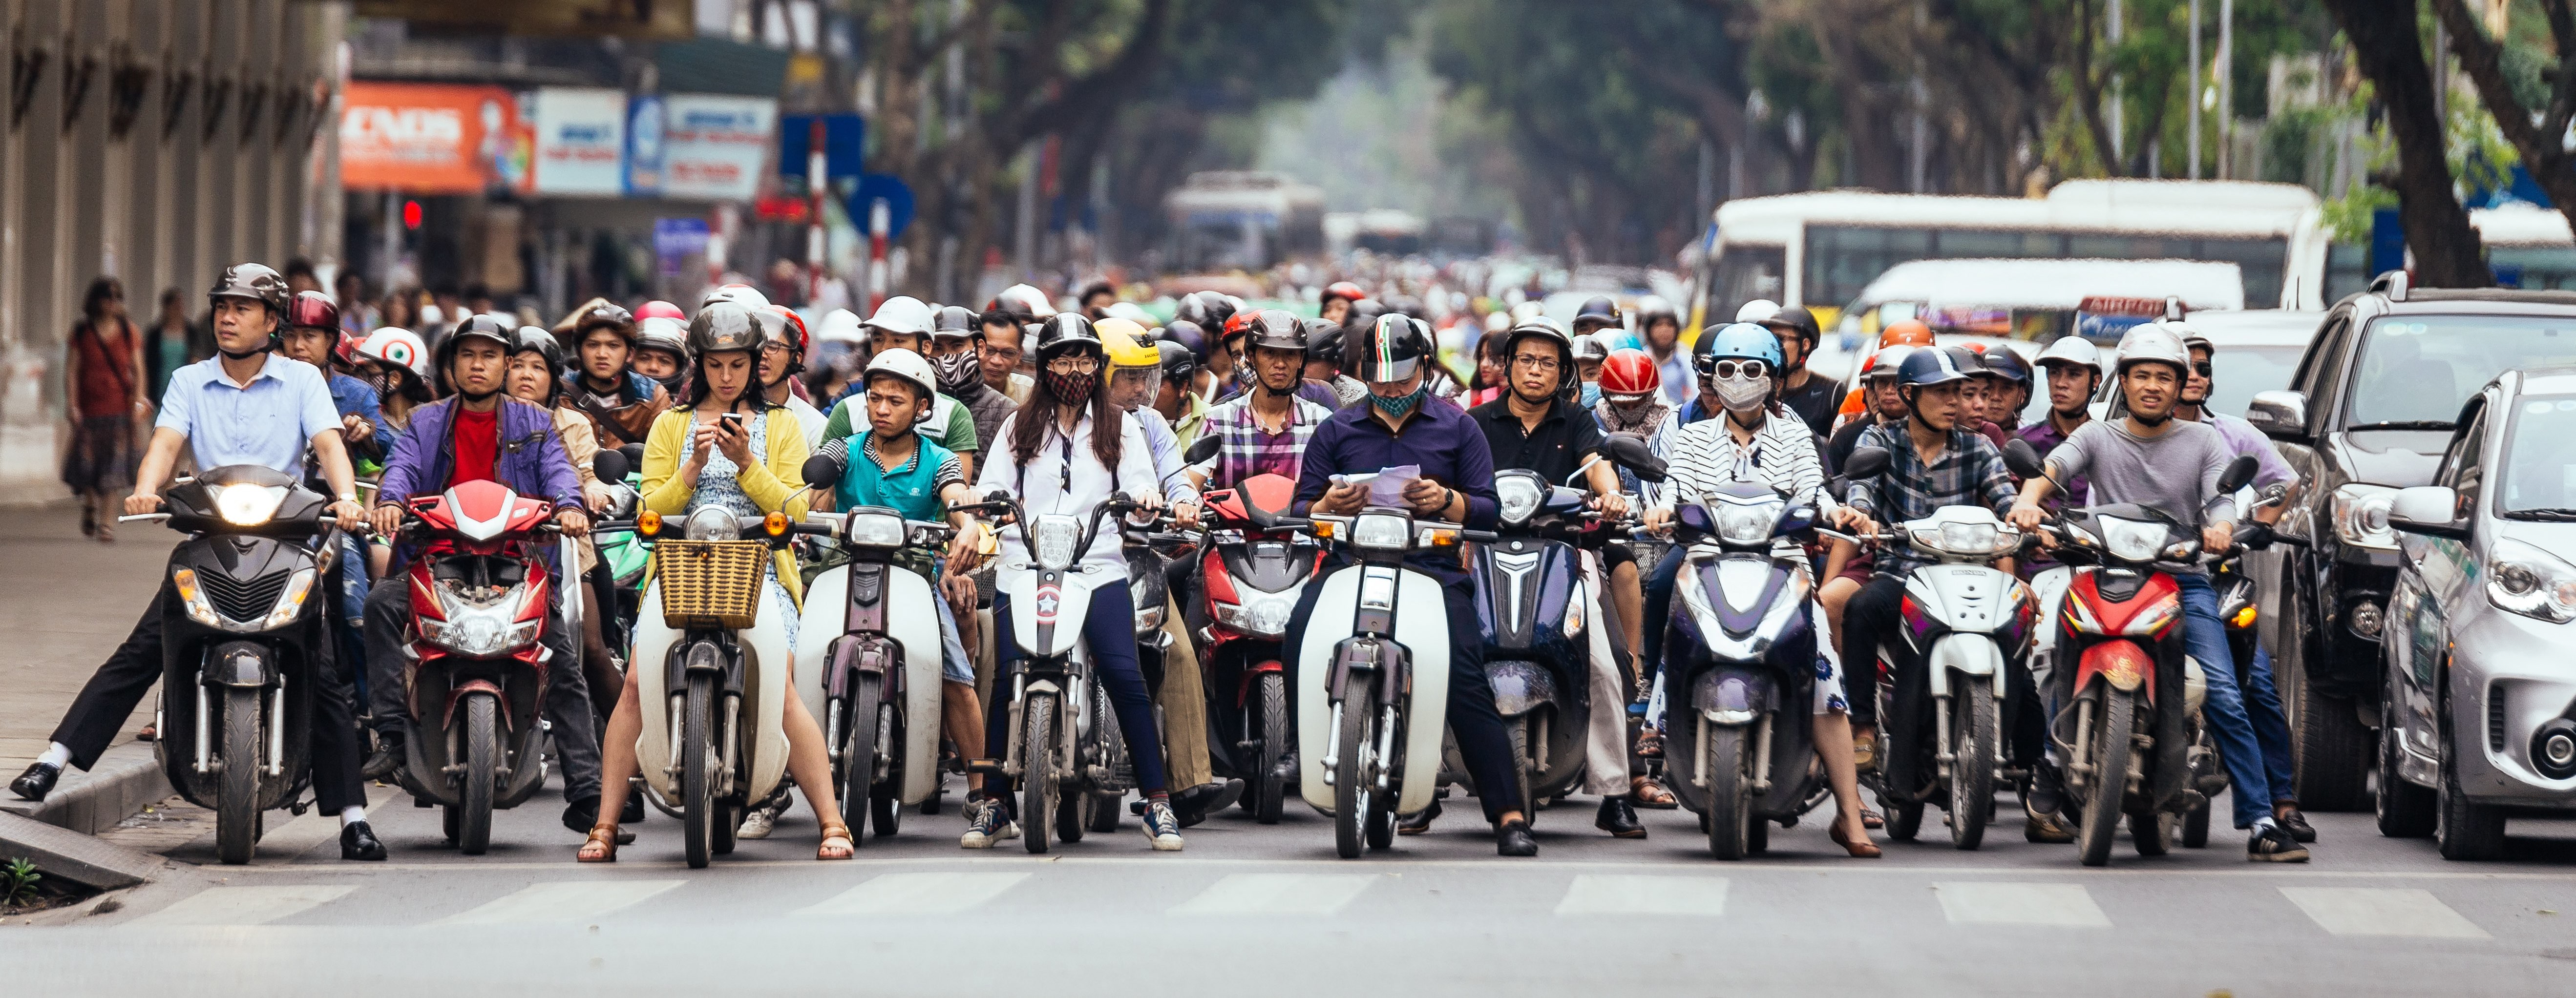 banners/AsiaTracks_Viet - Hanoi - Motorcycles._602fb8149fc58.jpg